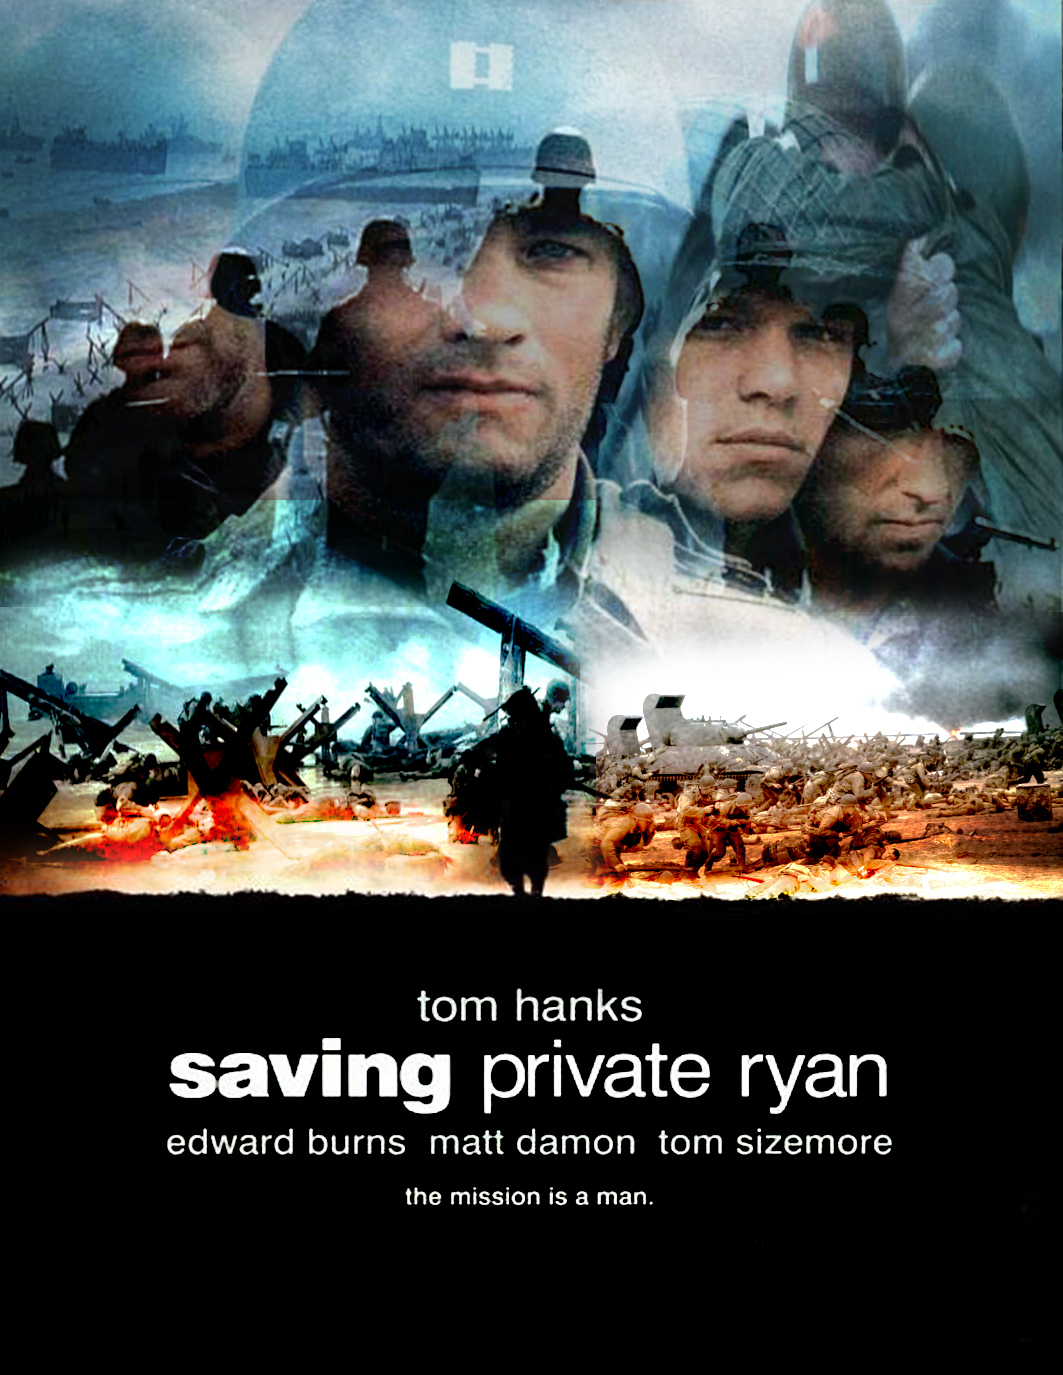 http://3.bp.blogspot.com/-5Z06o3o7JYI/T8o6zDDiuTI/AAAAAAAAAoE/gX9qYwKpS_8/s1600/Saving-Private-Ryan.jpg